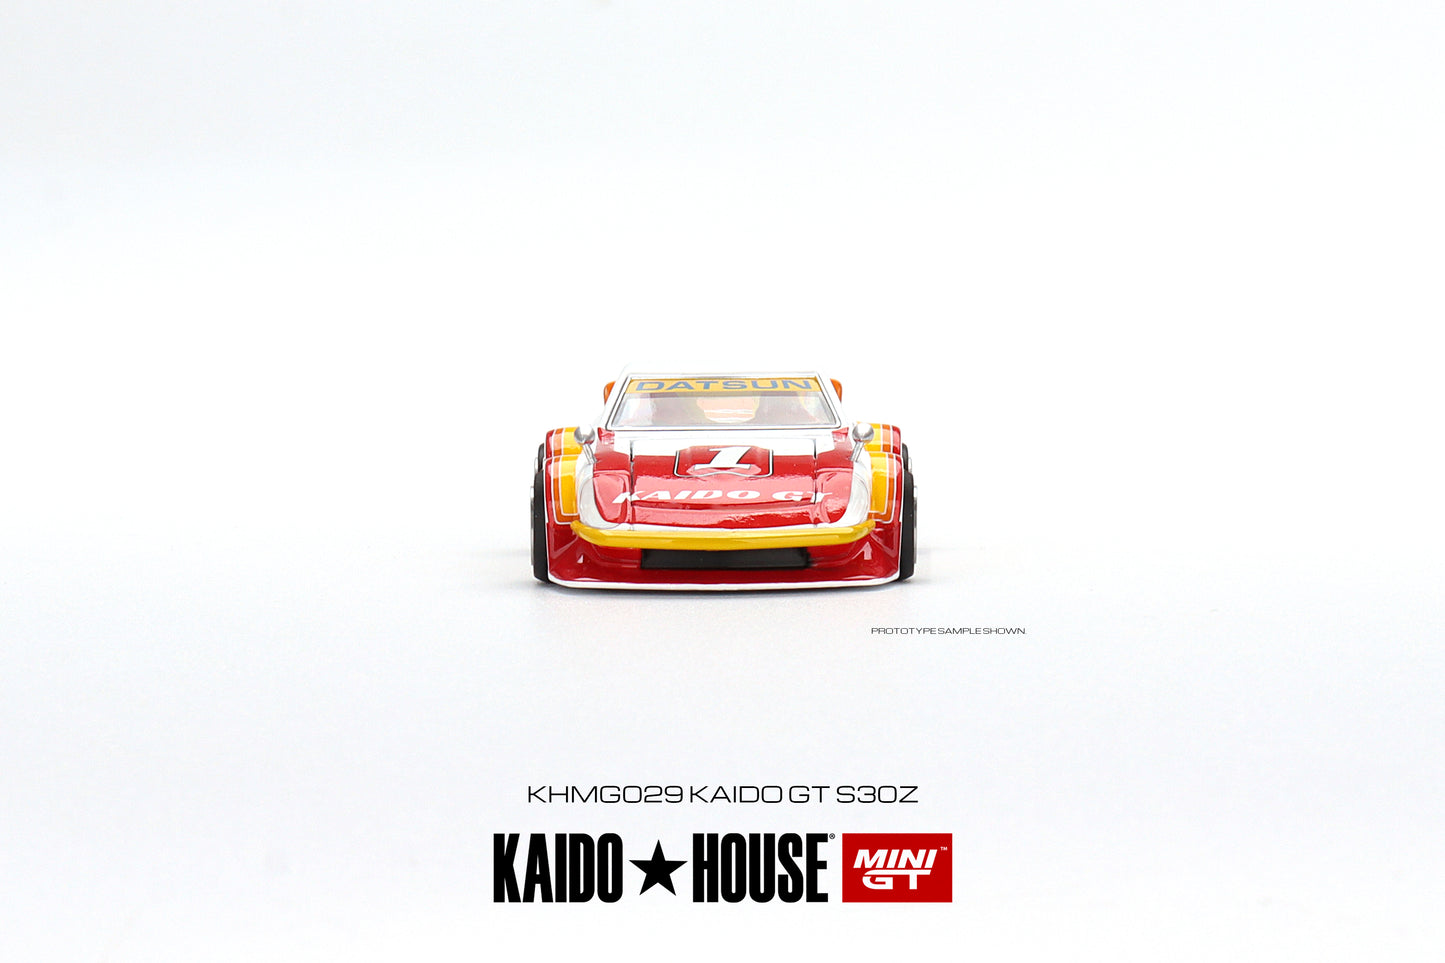 MINI GT X KAIDO HOUSE Datsun KAIDO Fairlady Z Kaido GT V1  - RHD [ KHMG029]